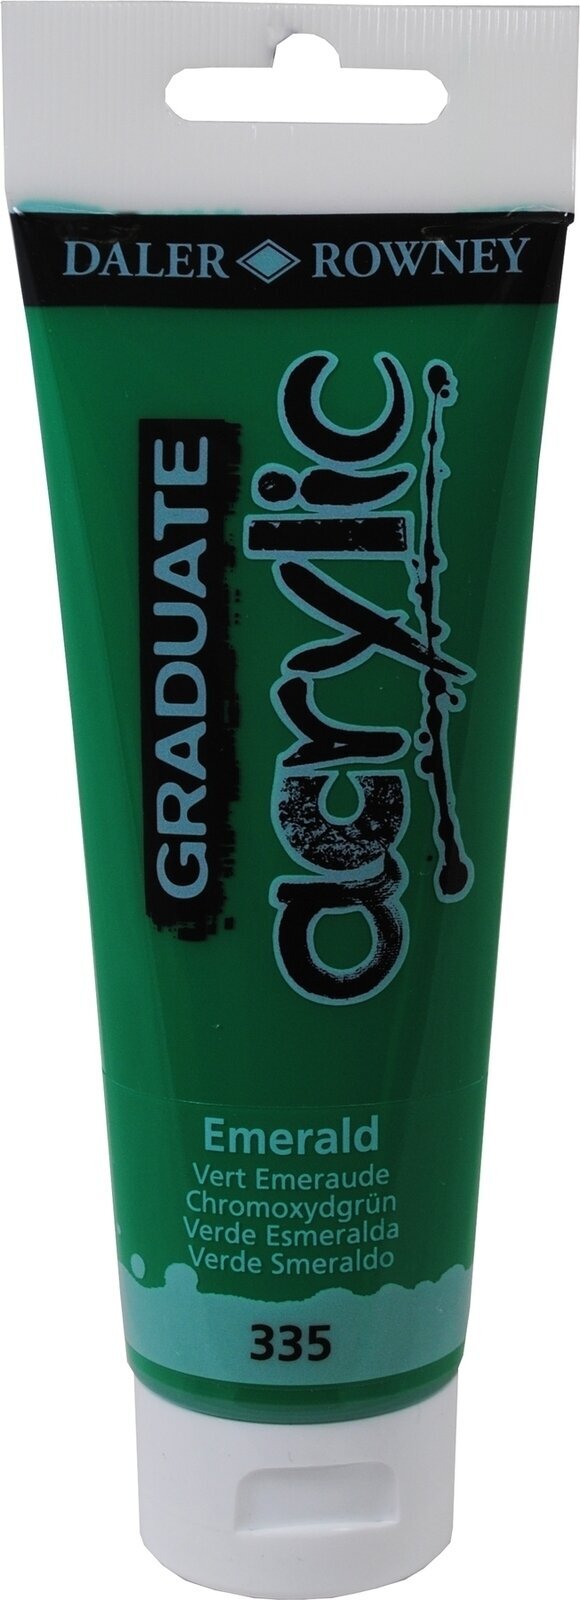 Aκρυλικό Χρώμα Daler Rowney Graduate Ακρυλική μπογιά Emerald Green 120 ml 1 τεμ.